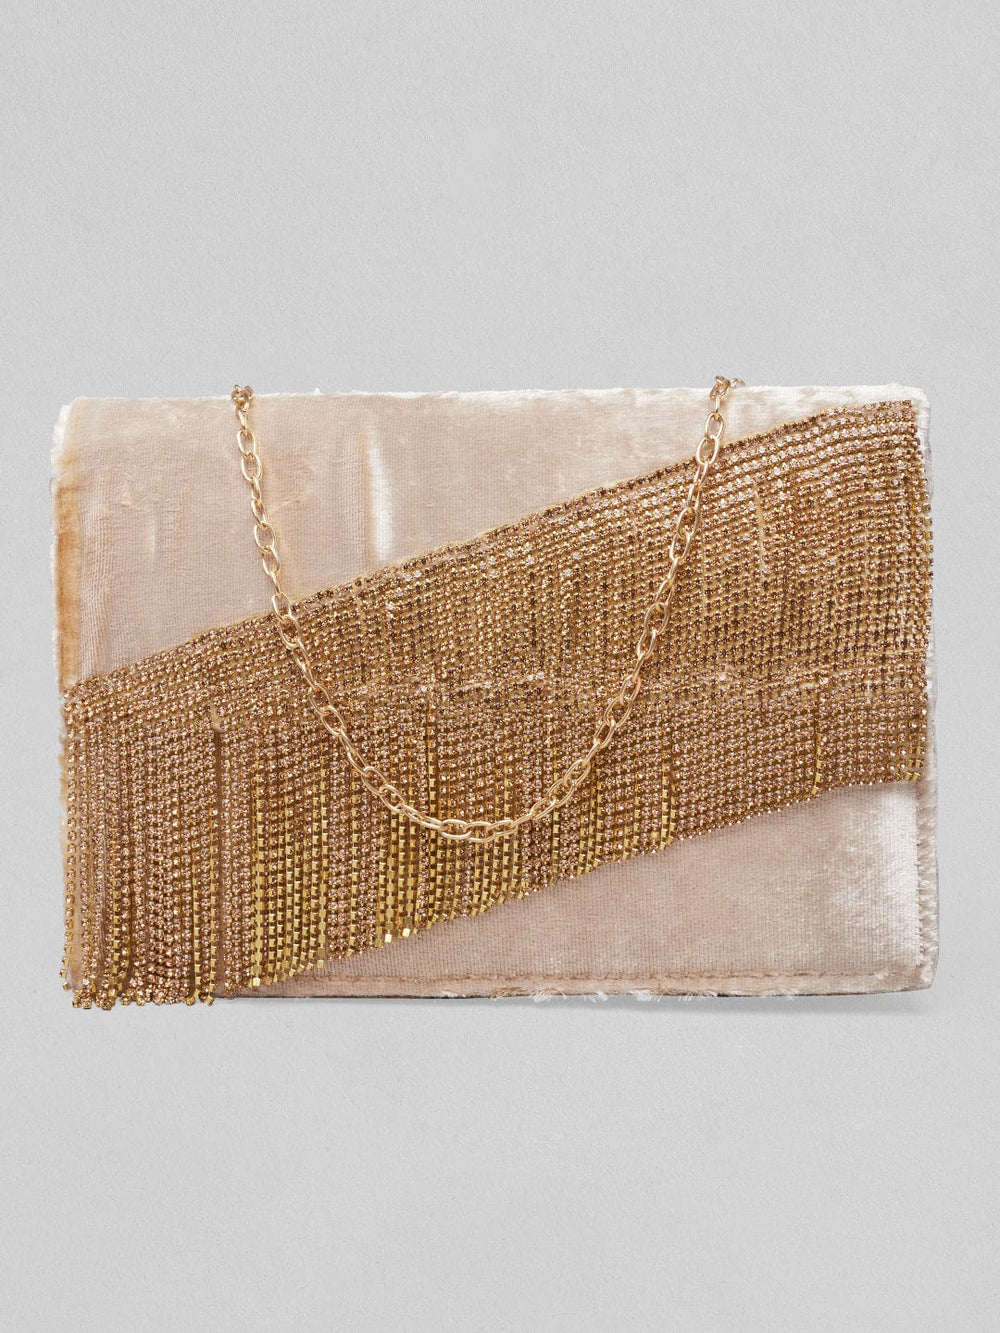 Rubans Golden Coloured Bag With Golden Embroided Beads Design. Handbag & Wallet Accessories